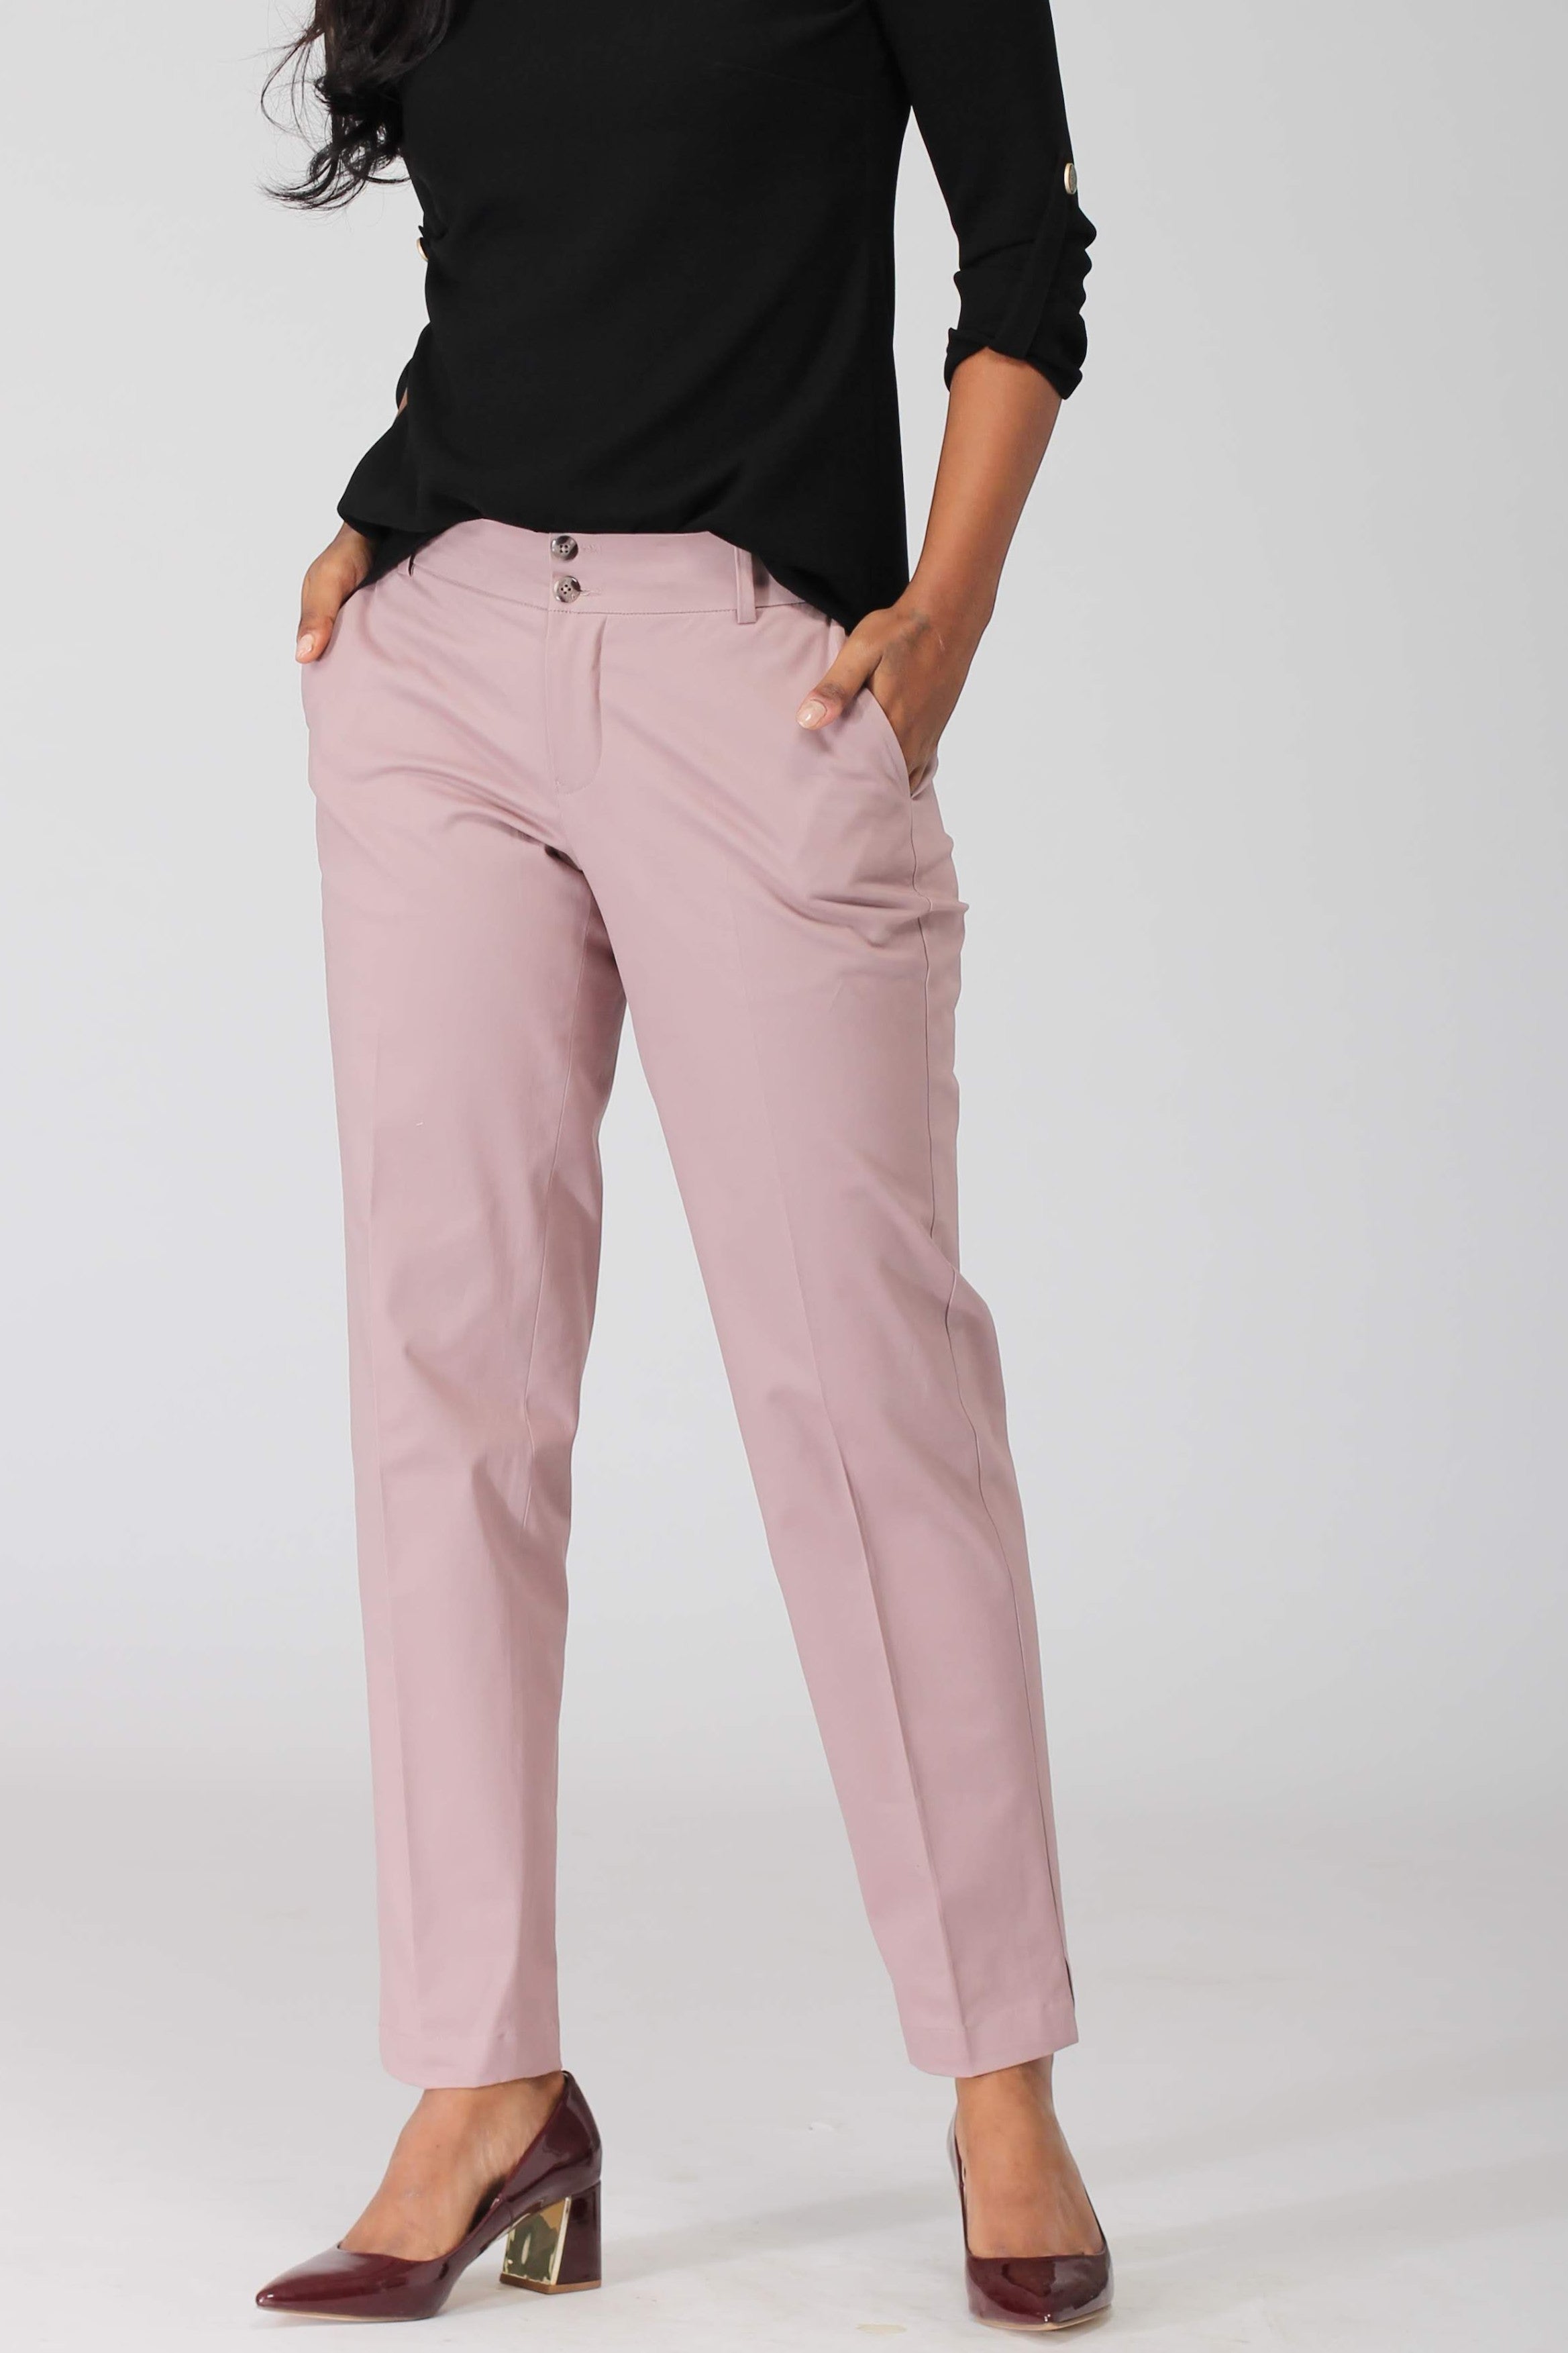 Women's Wide Leg Pants Summer Cotton Linen Elastic Waist Drawstring Trousers  Loose Comfortable Breathable Casual Pants - Walmart.com